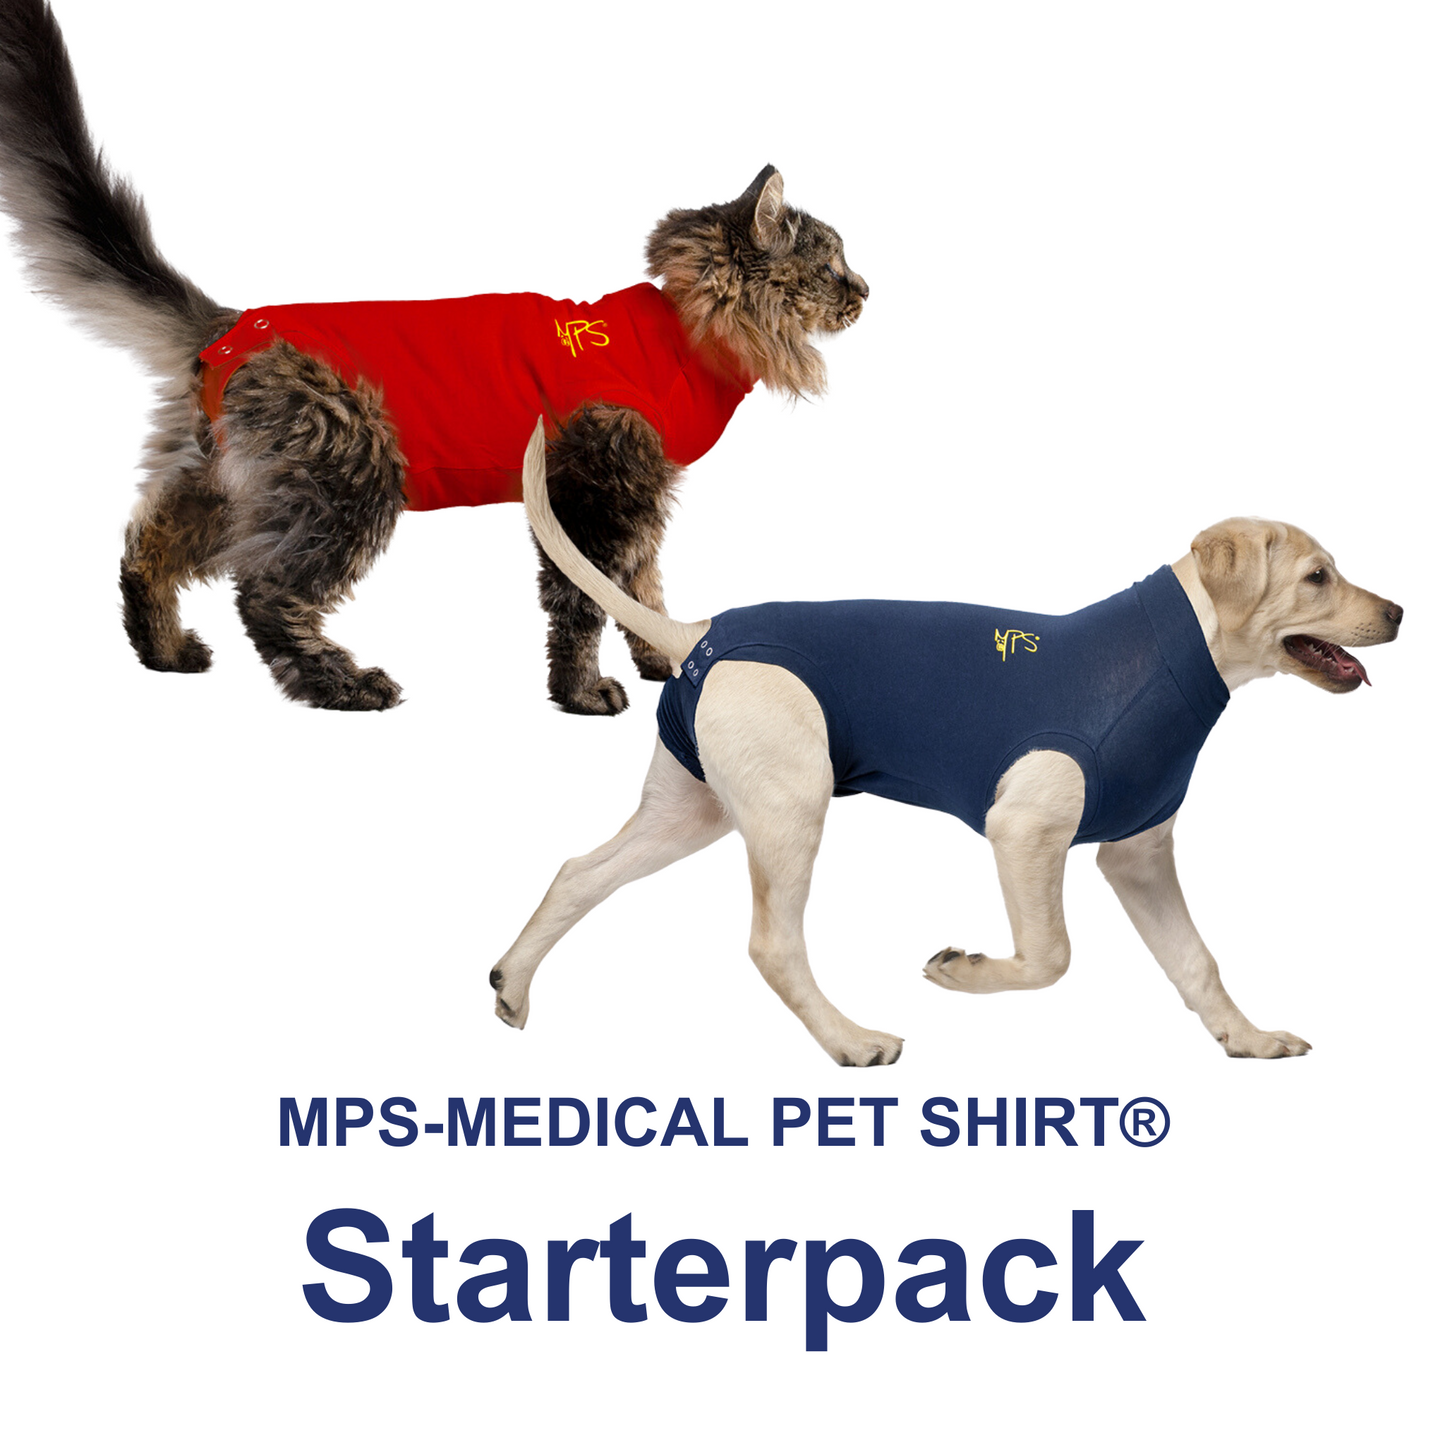 MPS-MEDICAL PET SHIRT® Starterpack